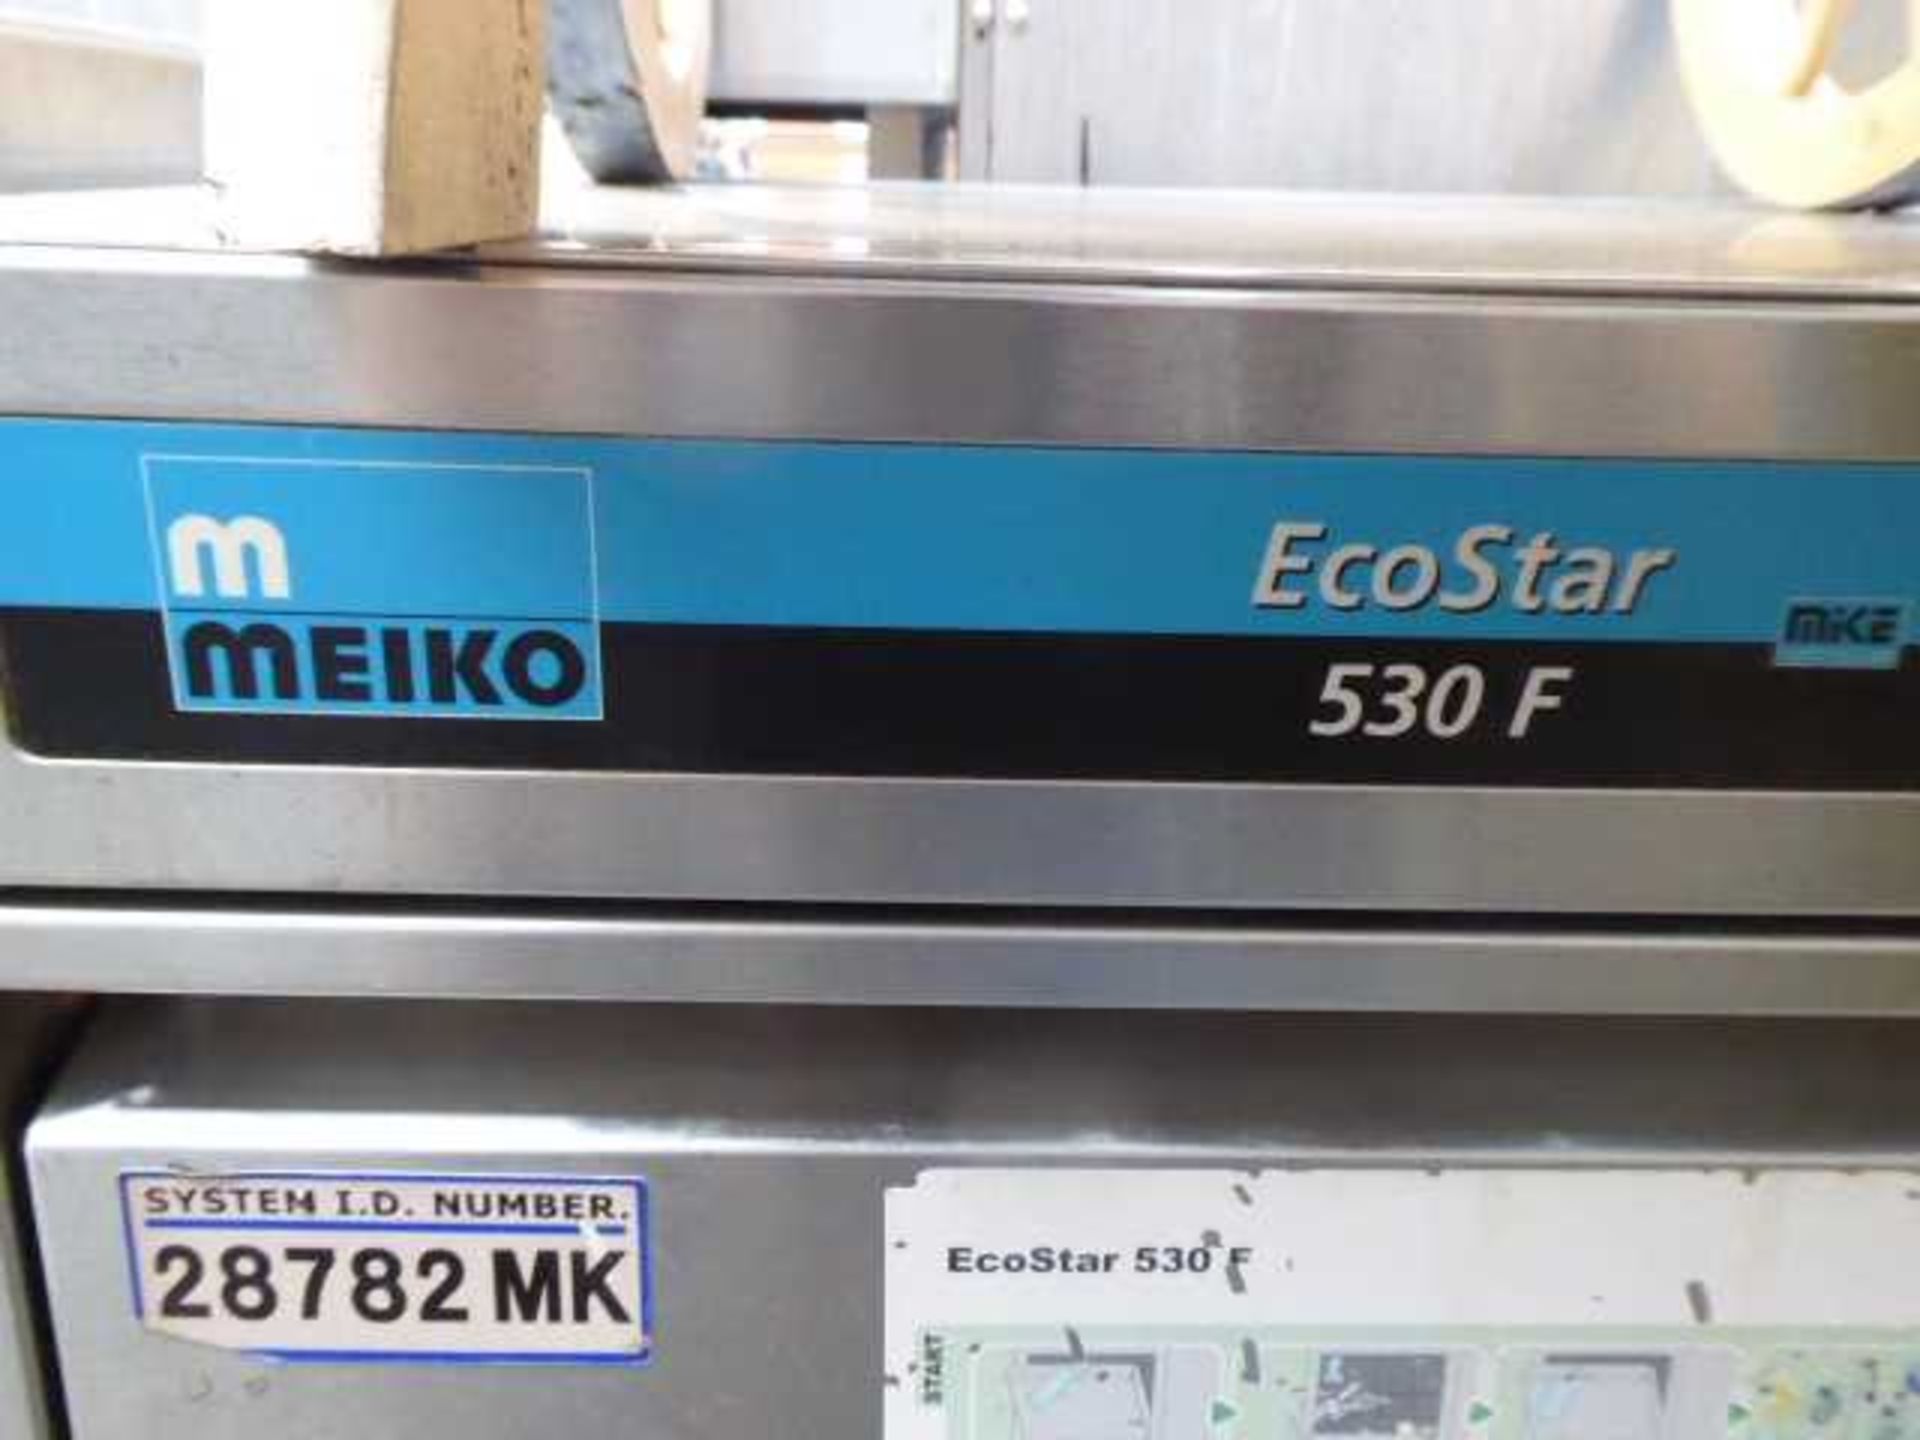 60cm Meiko Ecostar 530F under counter drop front dishwasher - Image 3 of 3